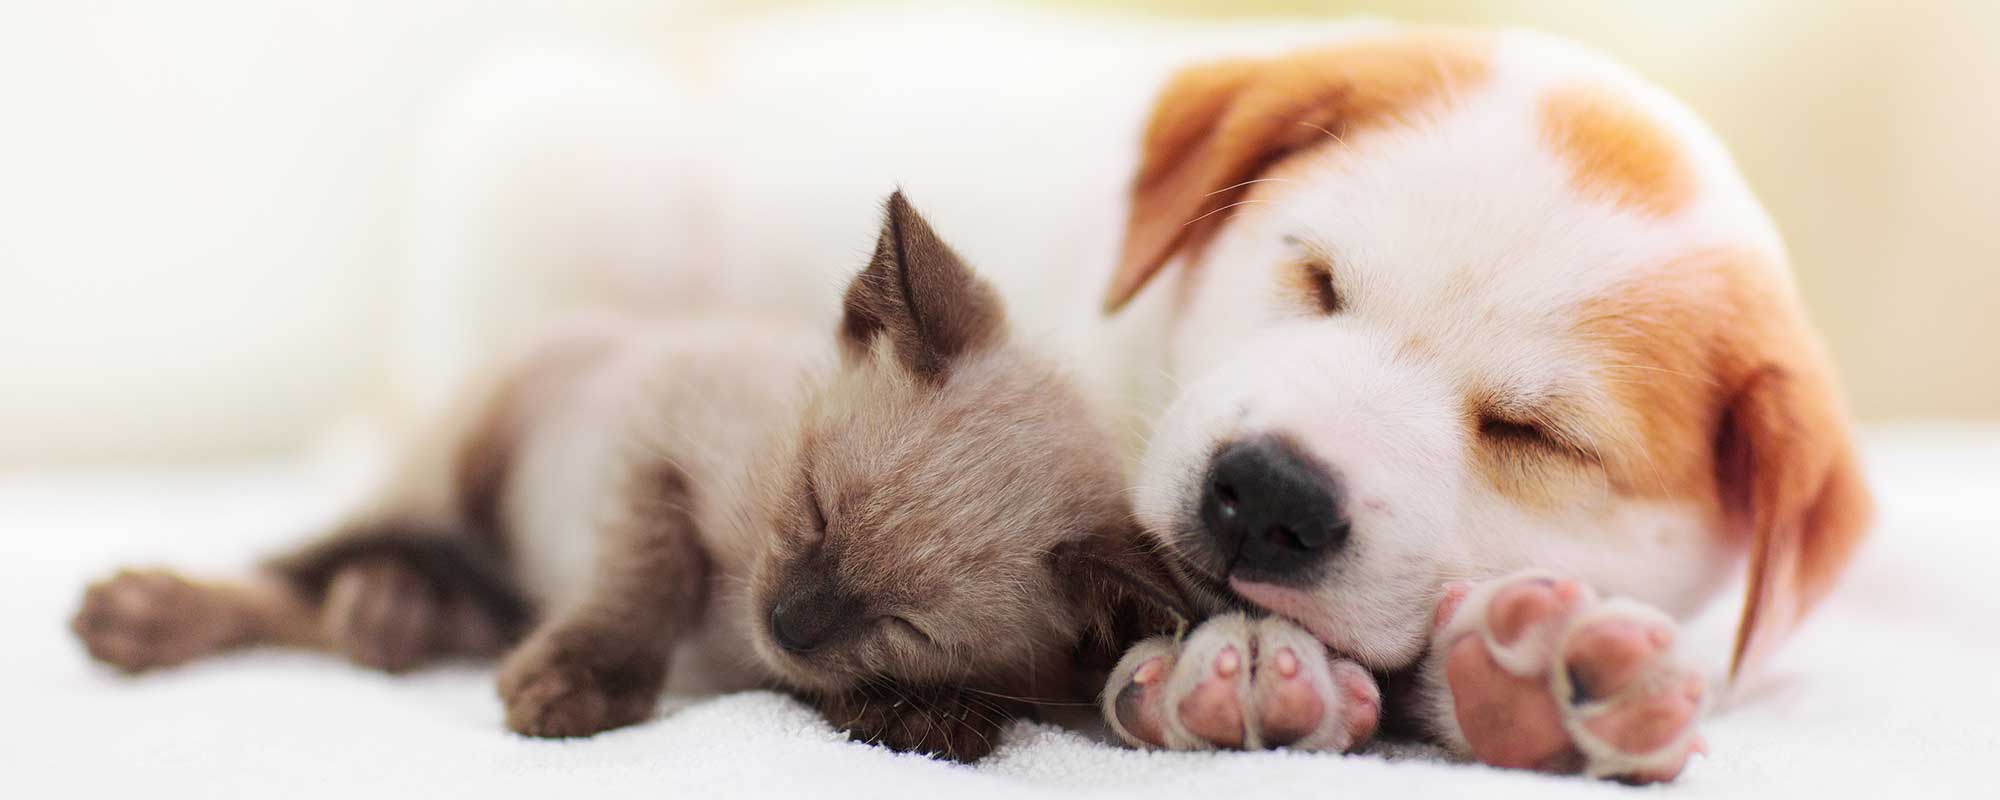 A kitten and puppy sleeping